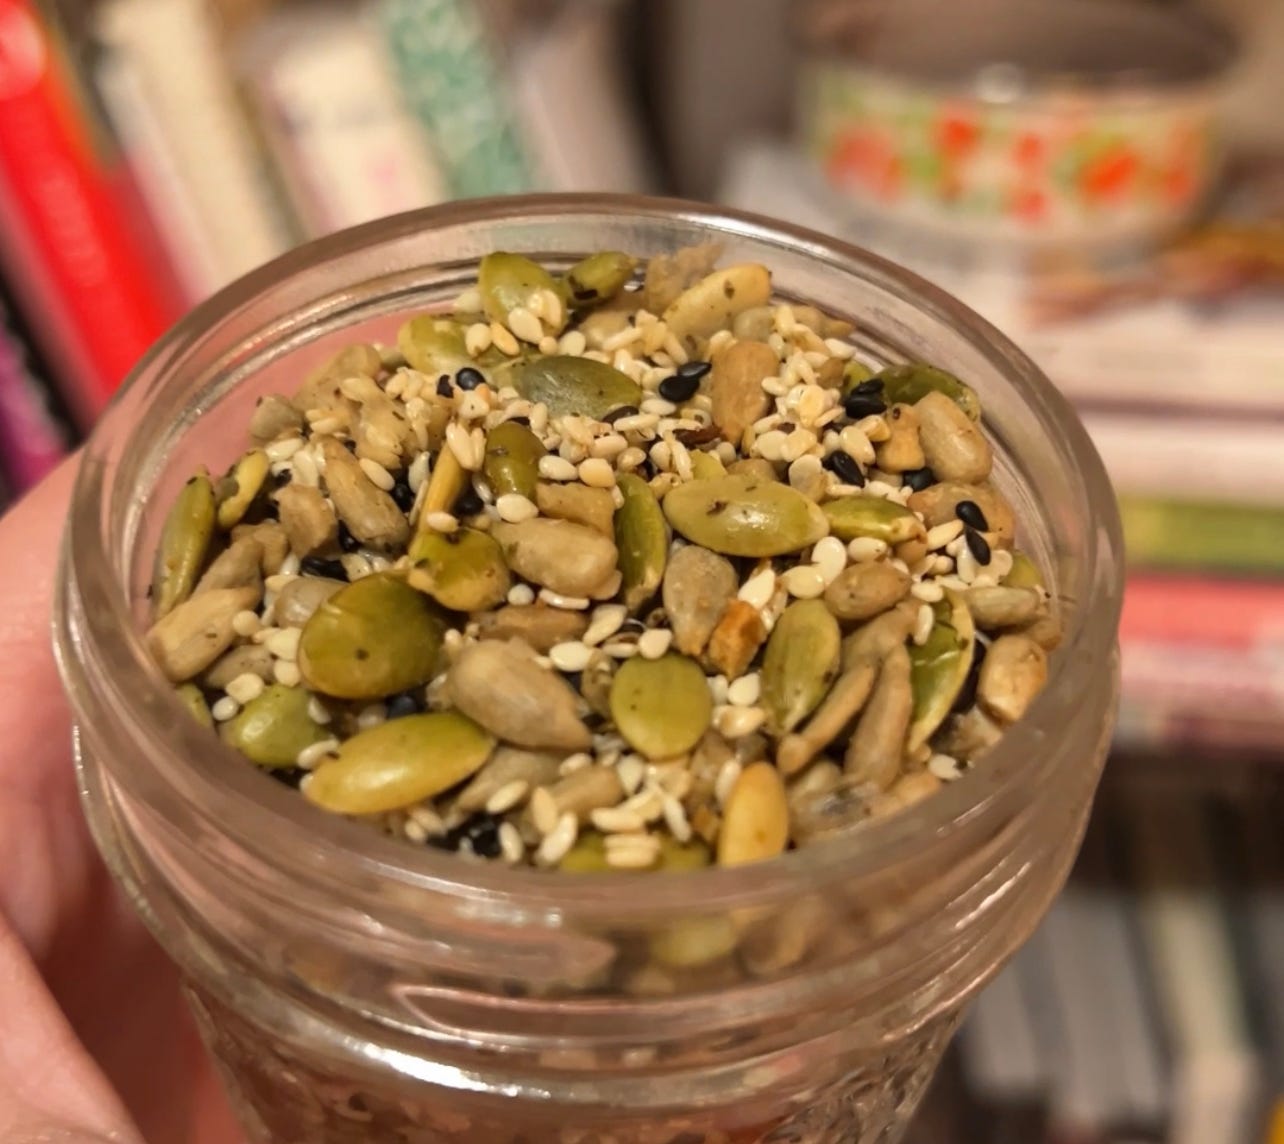 sesame seeds, pepitas, sunflower seeds in a glass jar.